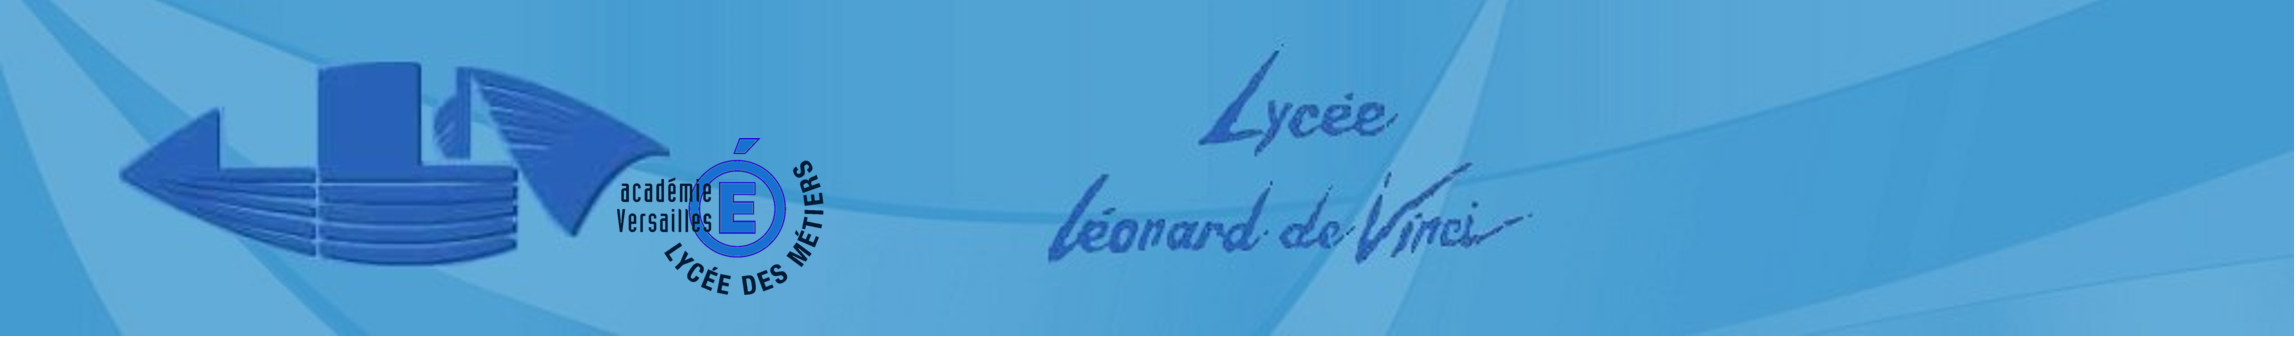 Lycée Léonard de Vinci